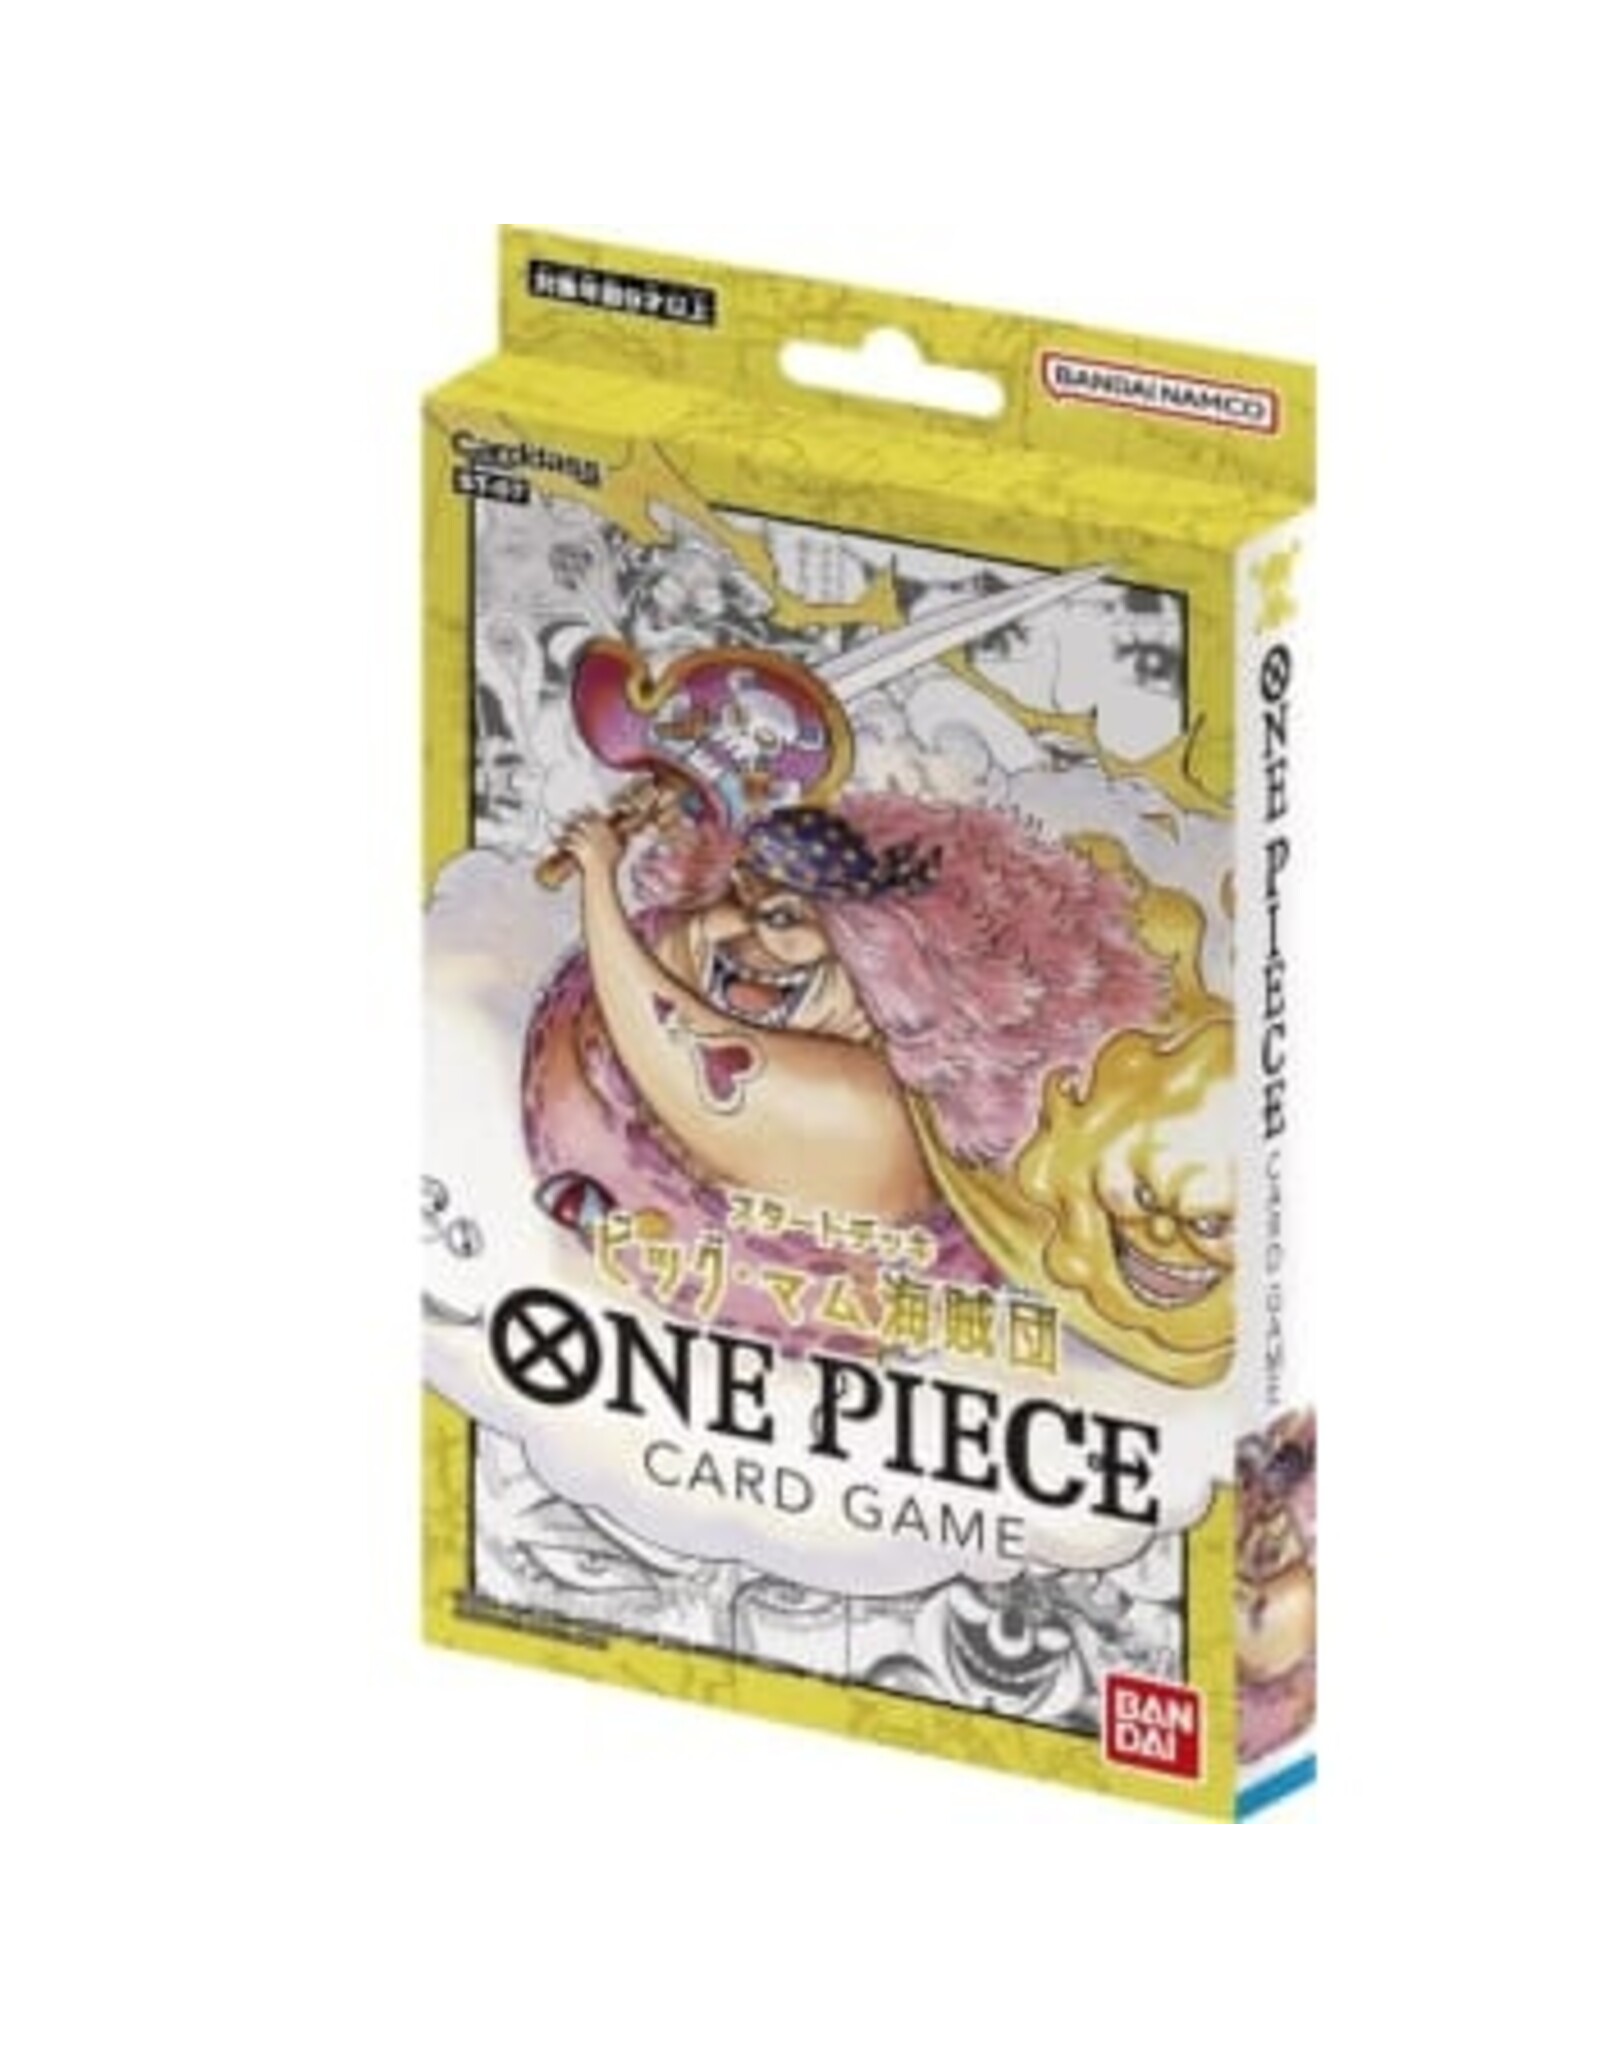 One Piece TCG: Big Mom Pirates Starter Deck